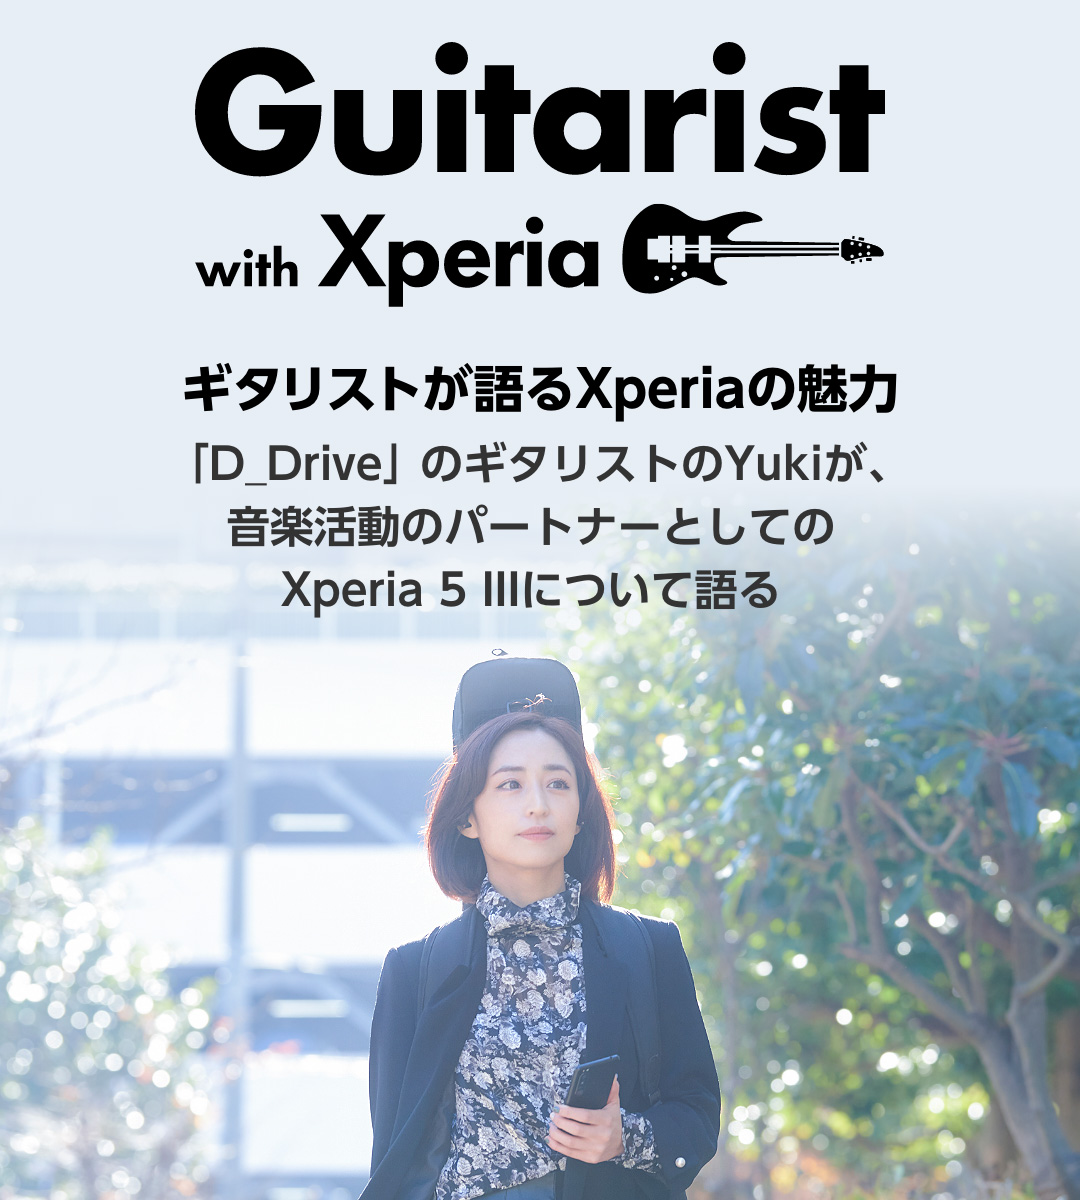 Guitarist with Xperia ギタリストが語るXperiaの魅力 「D_Drive」のギタリストのYukiが、音楽活動のパートナーとしてのXperia 5 IIIについて語る